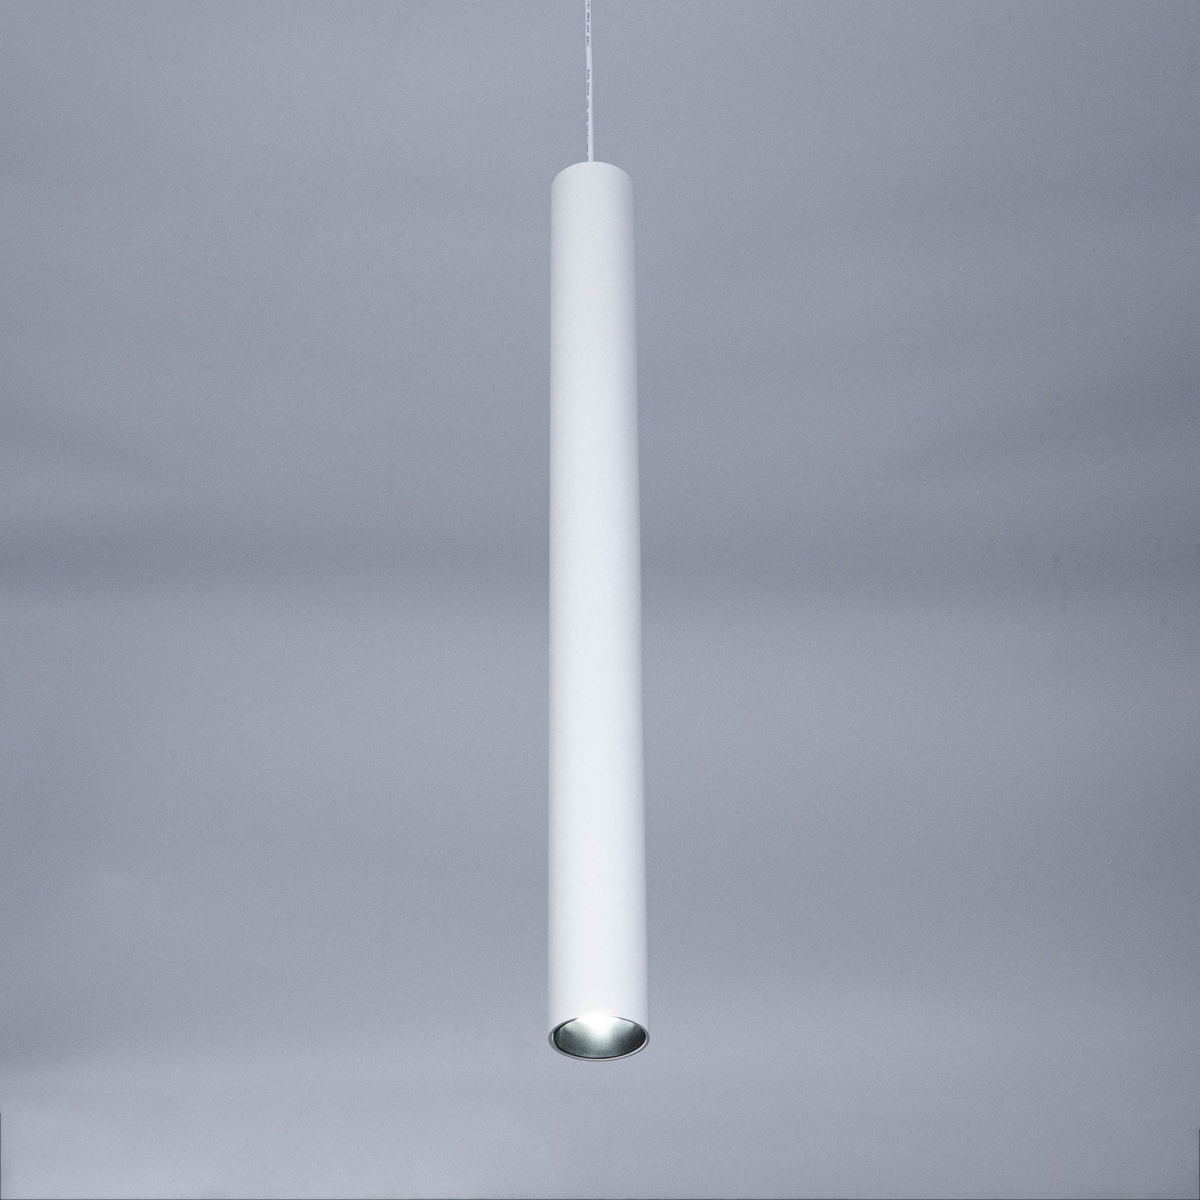 подвесной светильник citilux тубус (tubus), артикул CL01PBL070N